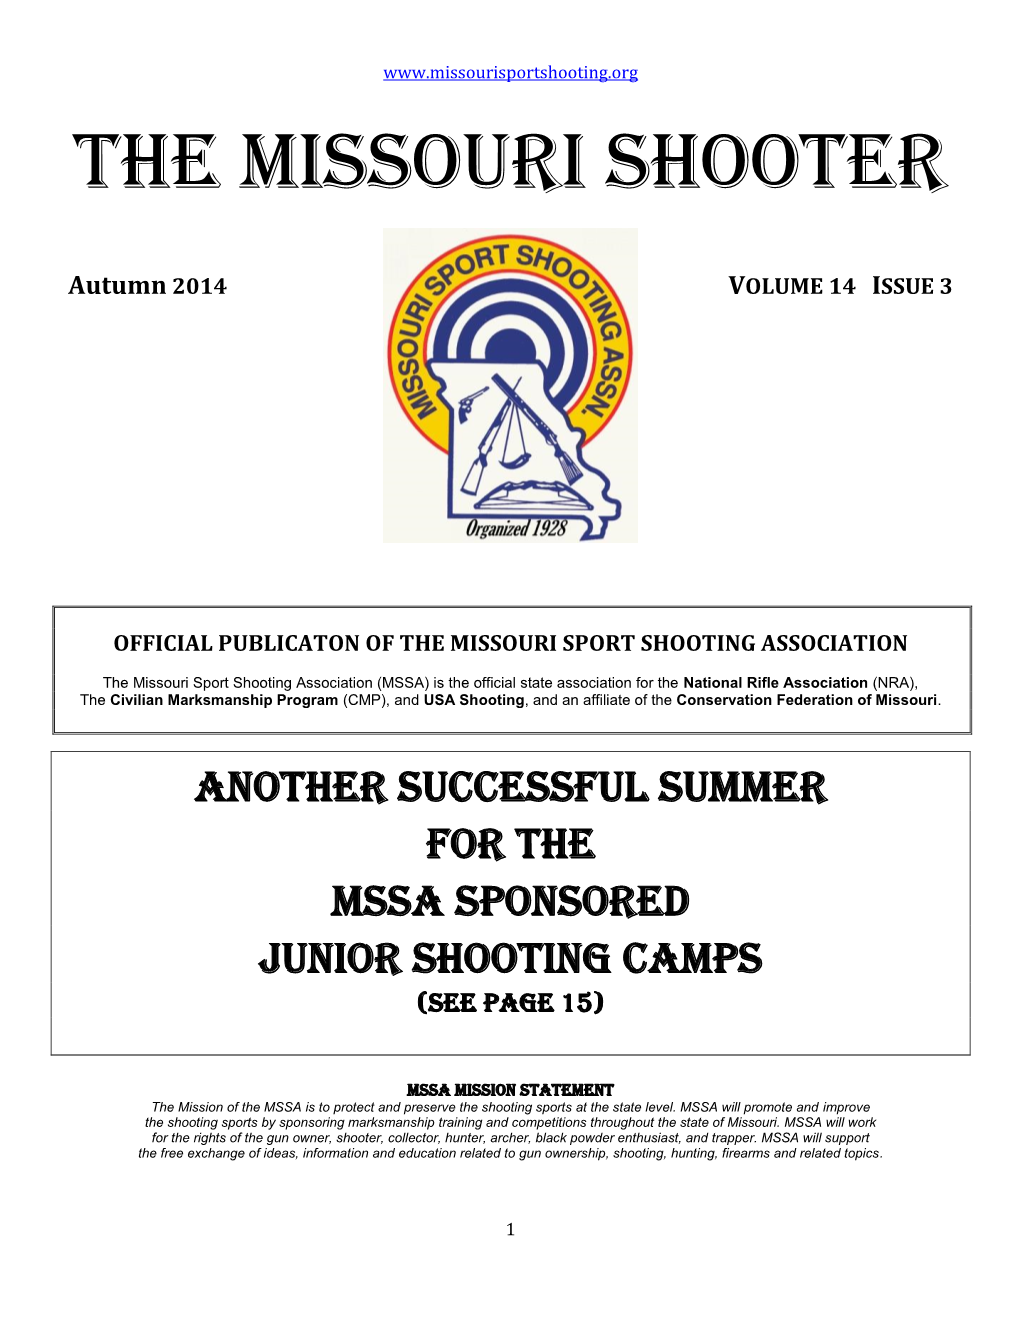 The Missouri Shooter